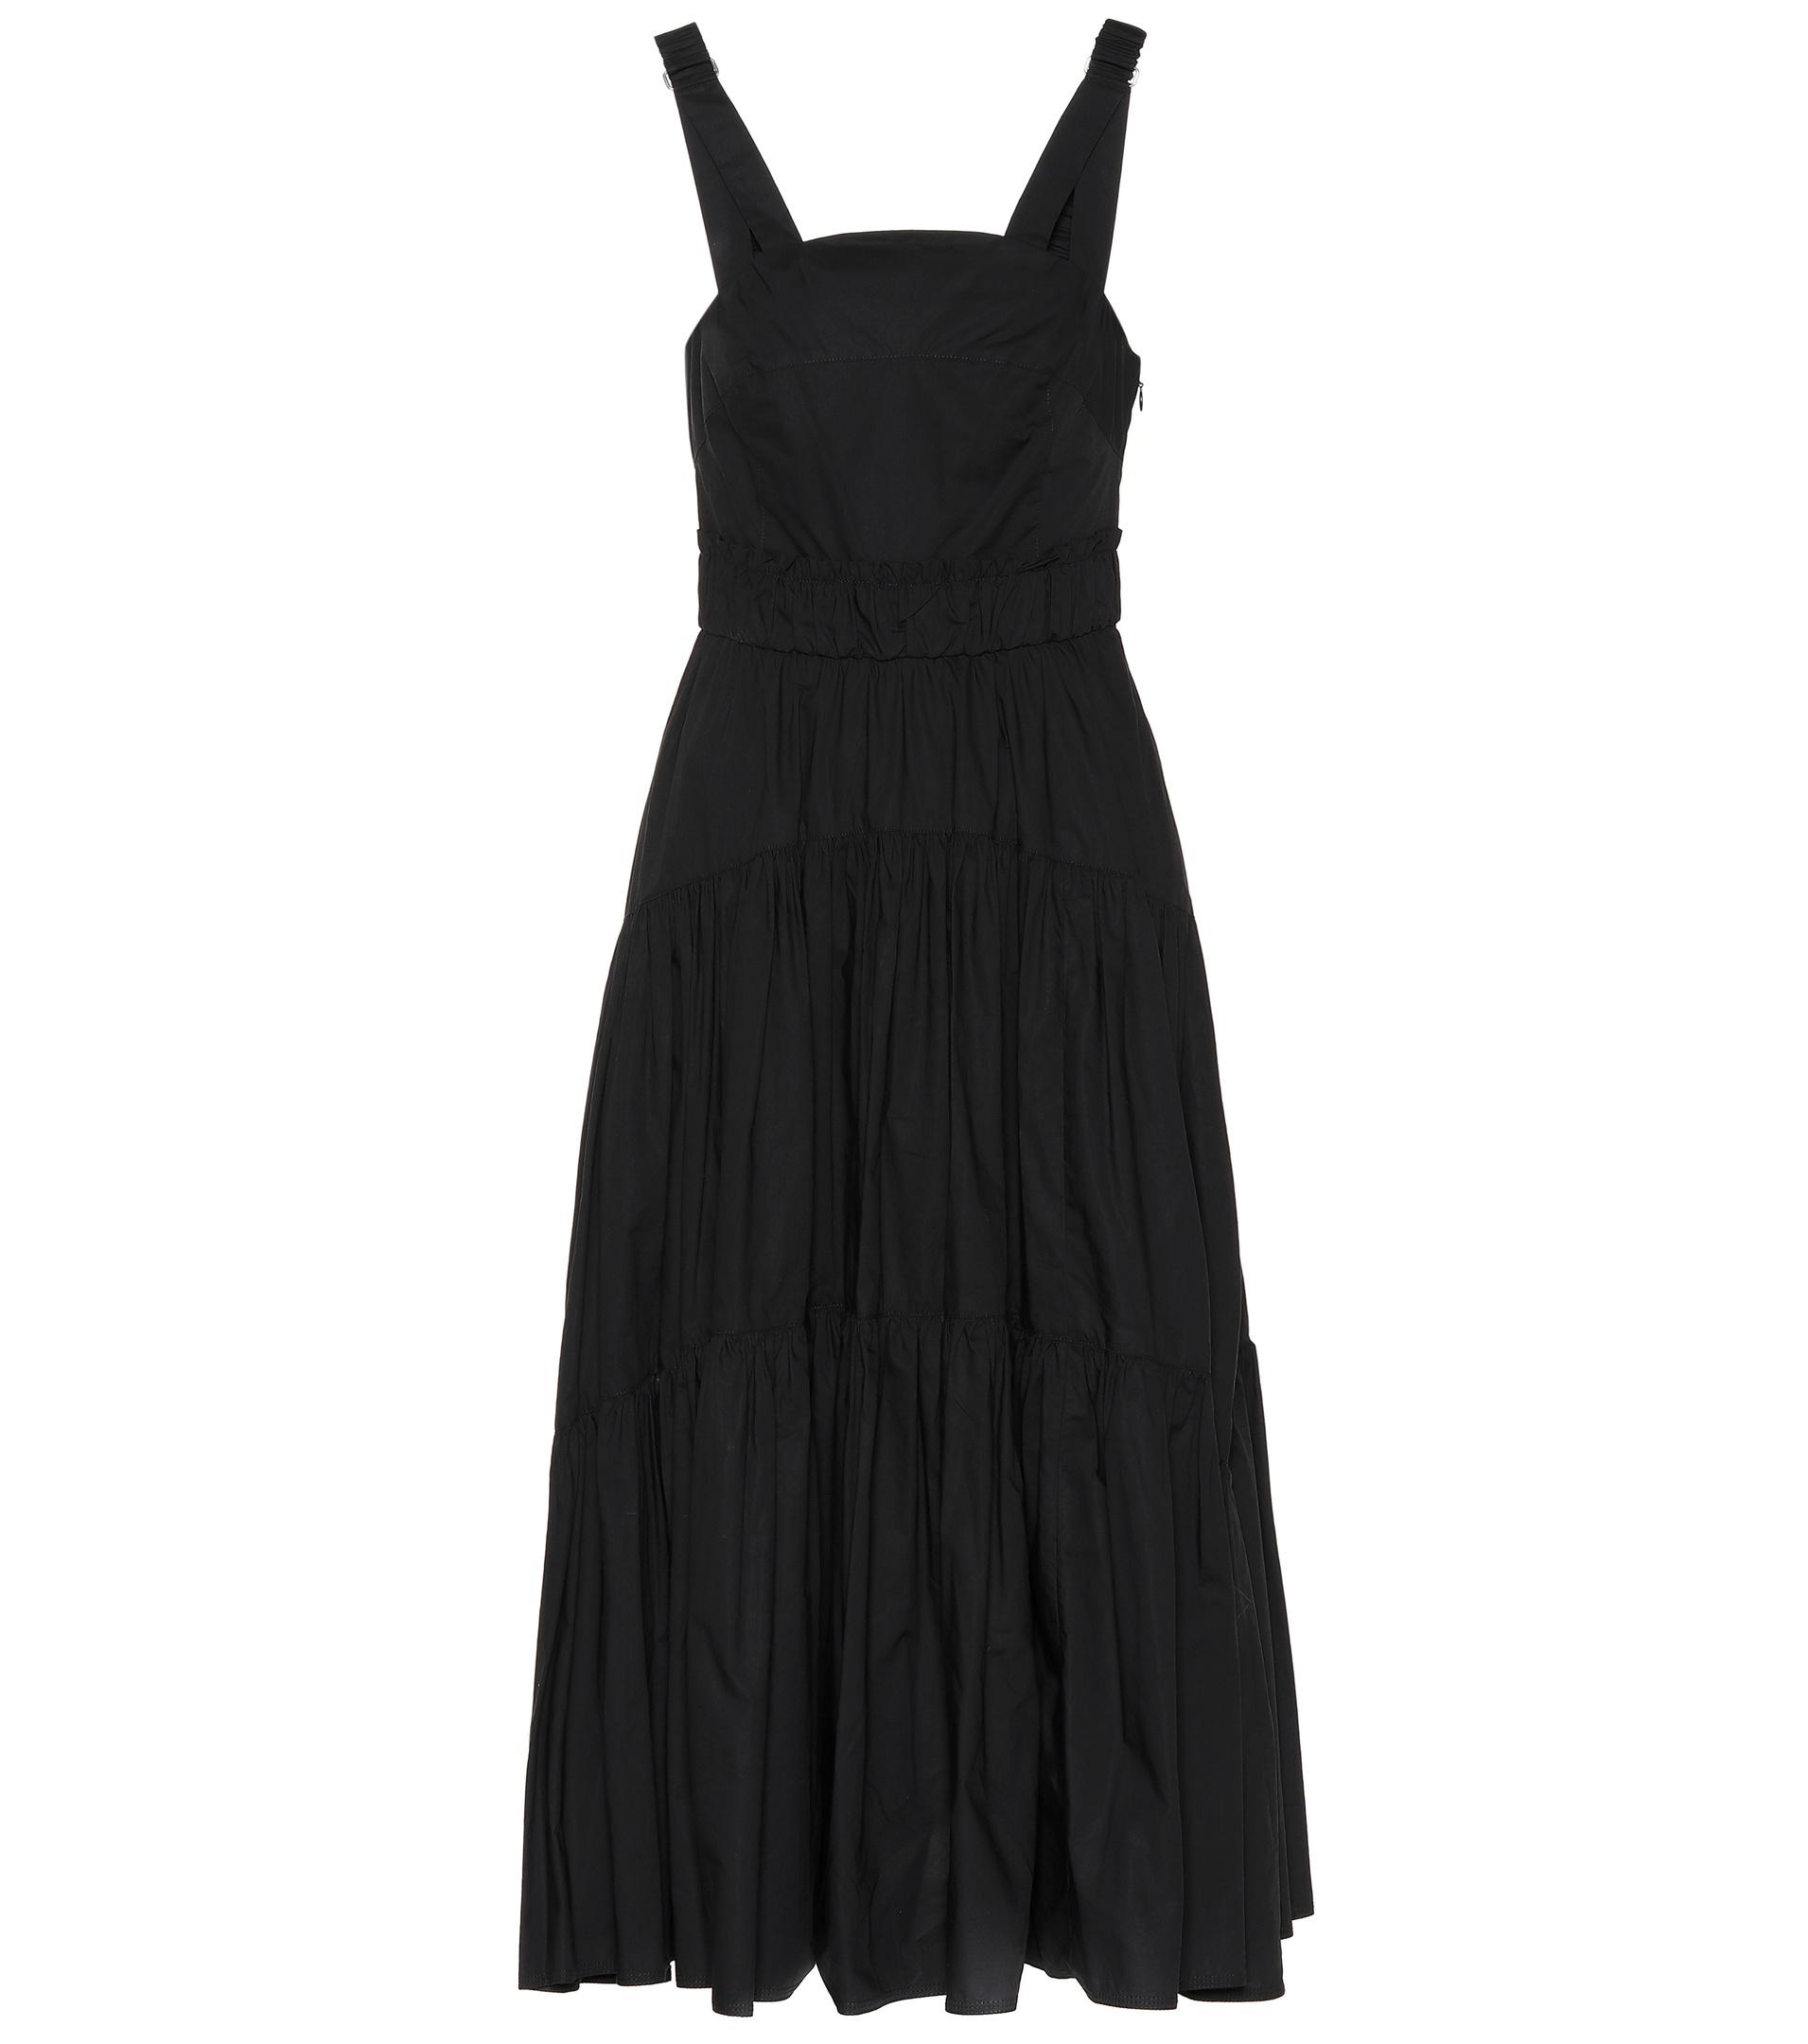 Proenza Schouler Cotton Dress in Black - Lyst